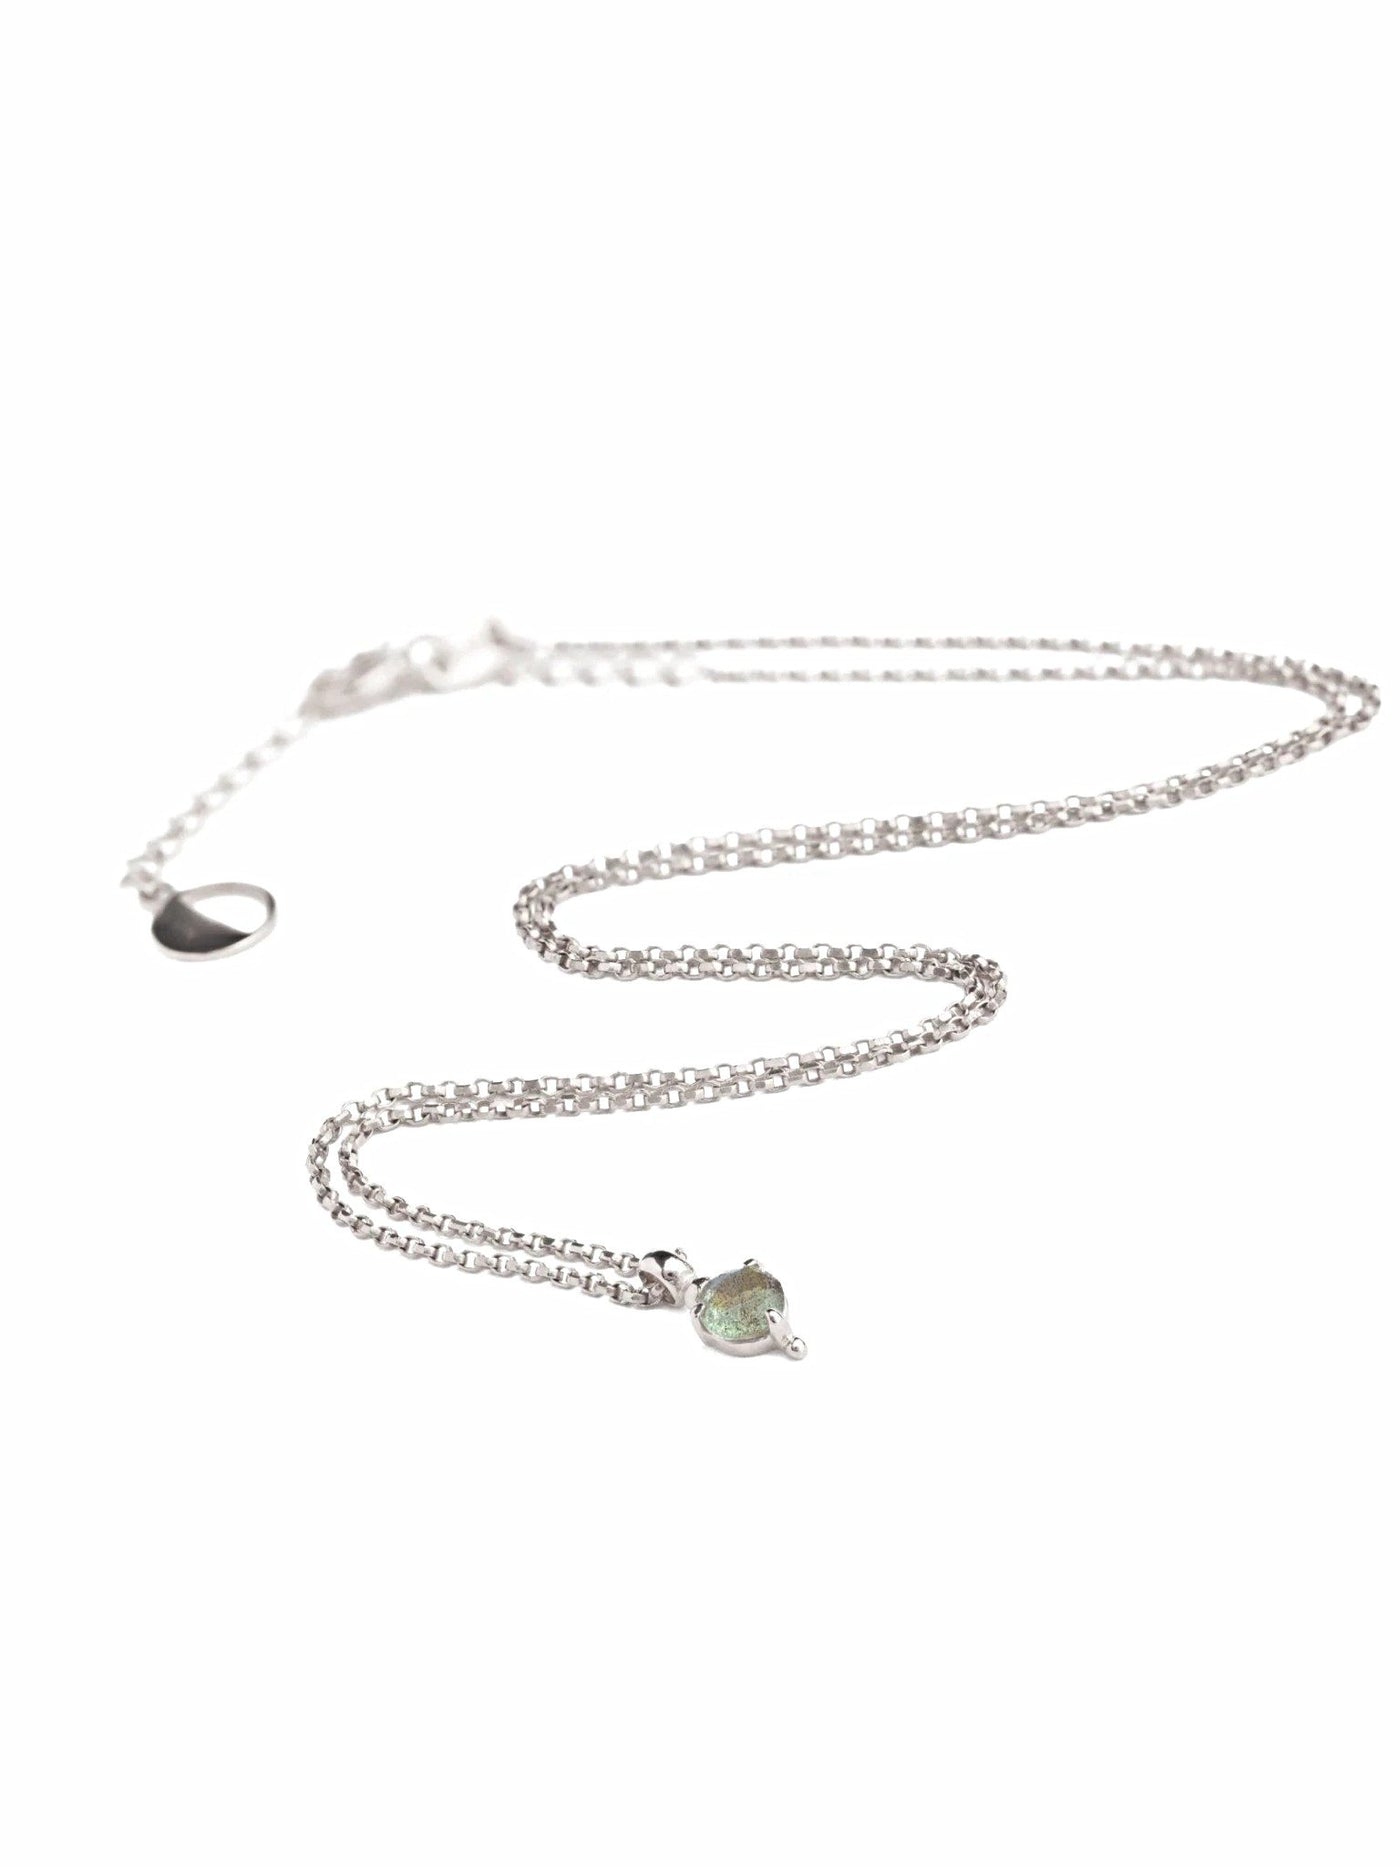 Eddy Labradorite Necklace - 19.7925 Sterling SilverBackUpItemsBirthstone NecklaceLunai Jewelry